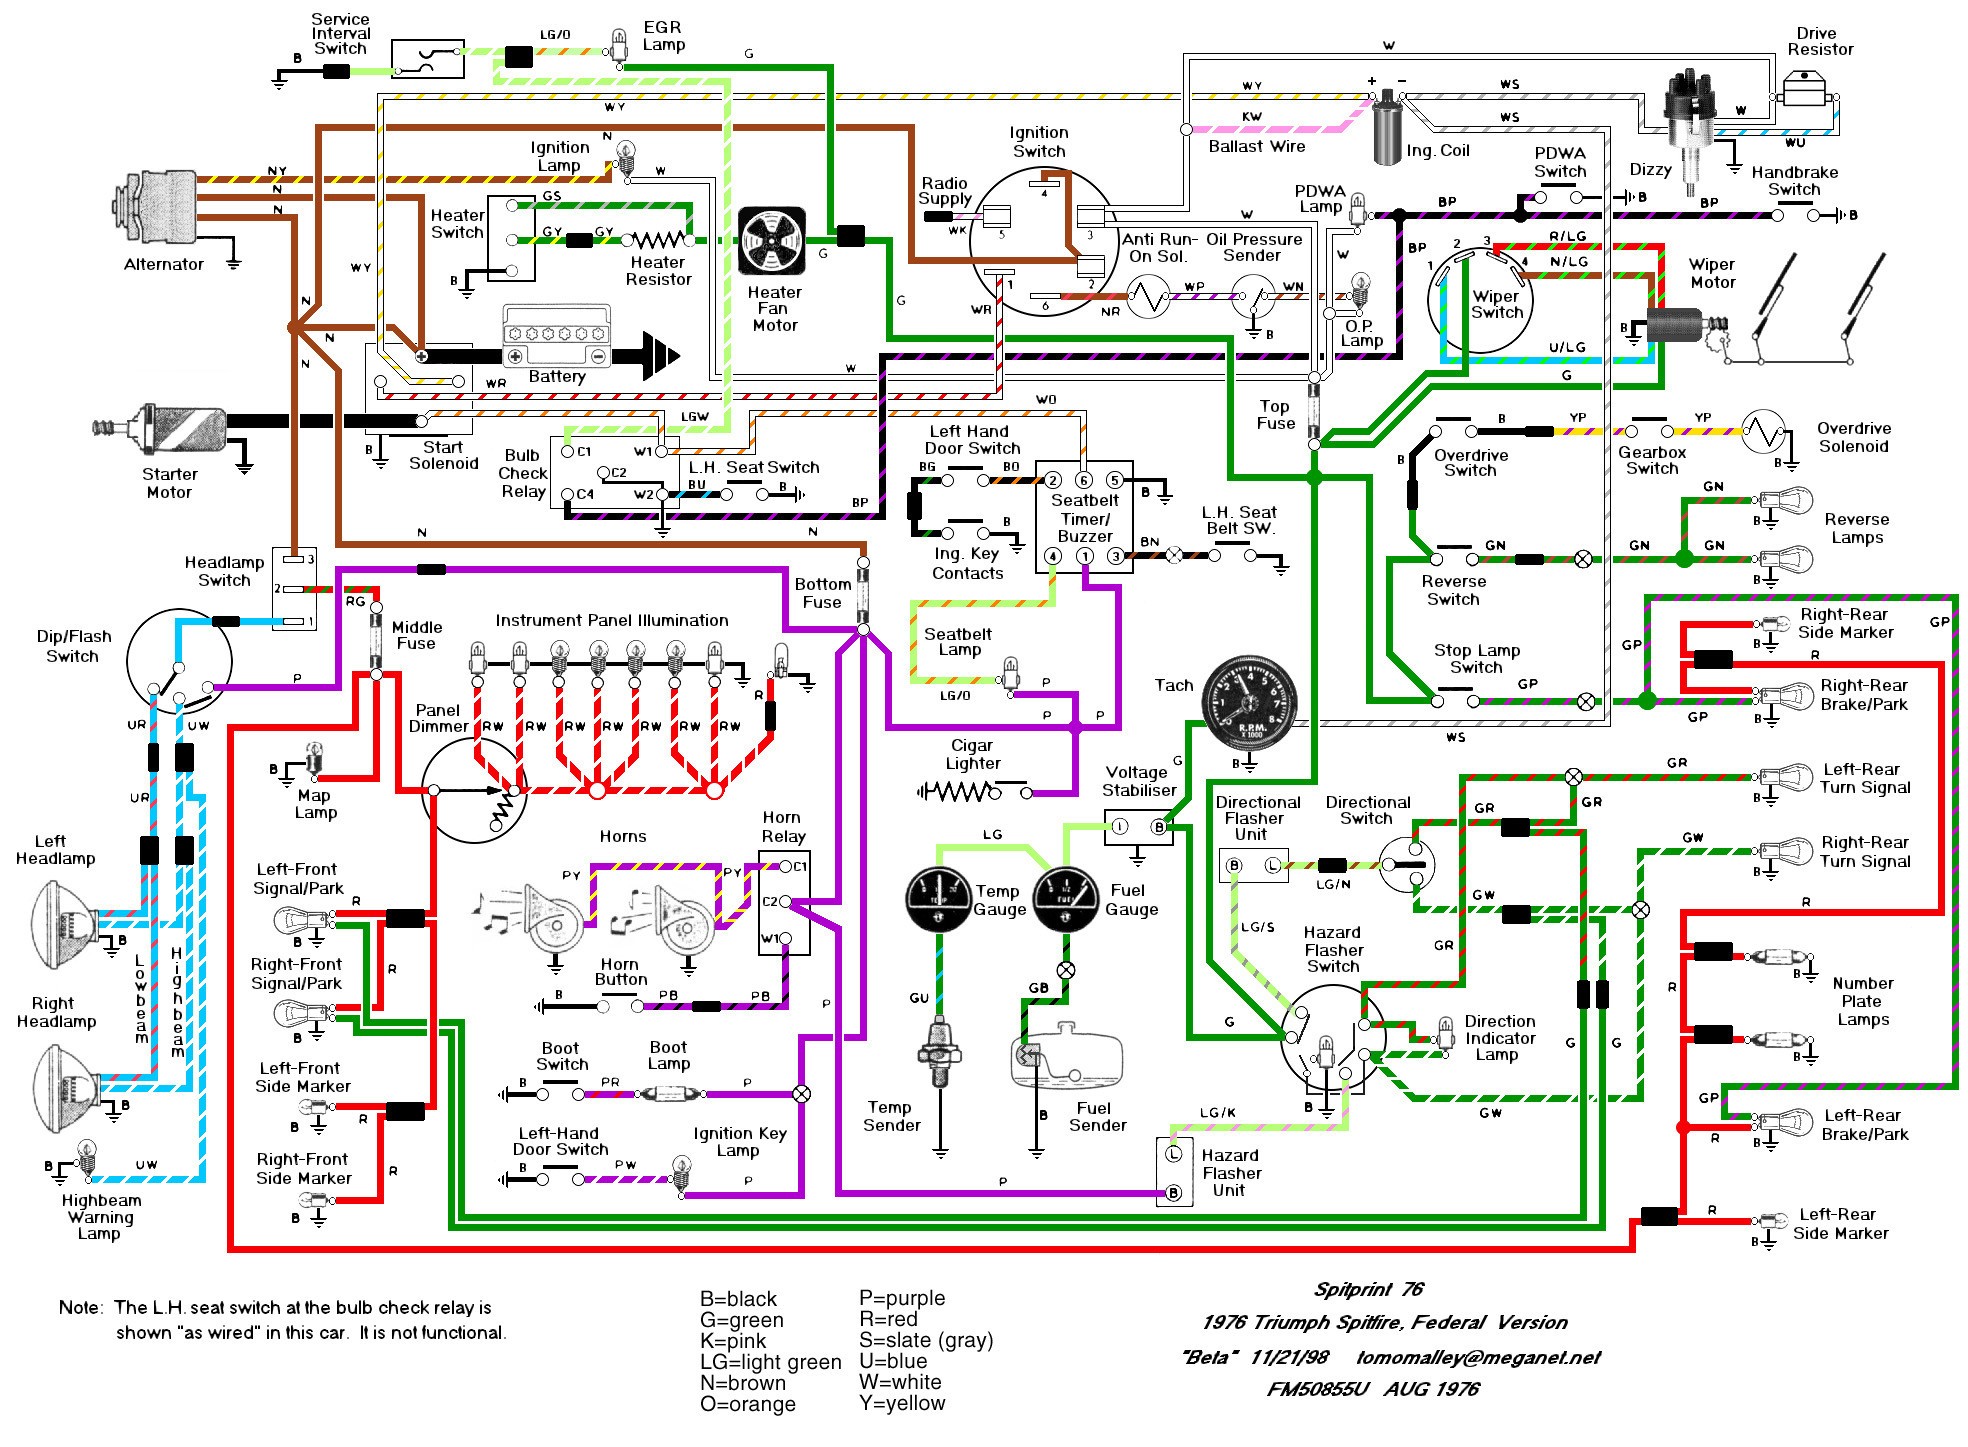 Car Wiring Diagram software Vehicle Wiring Diagrams Free